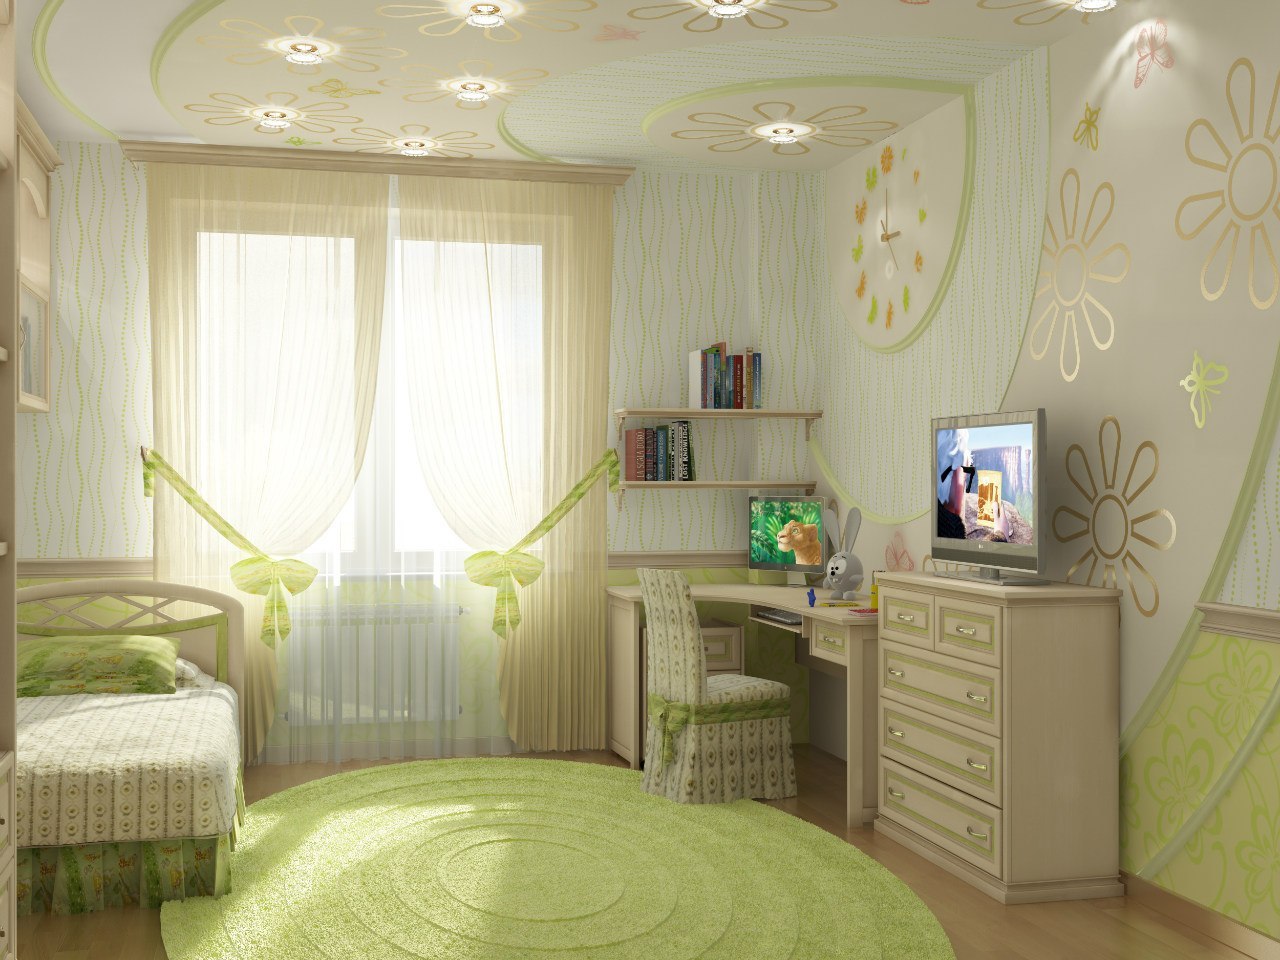 Photo design of a children's room in bright colors